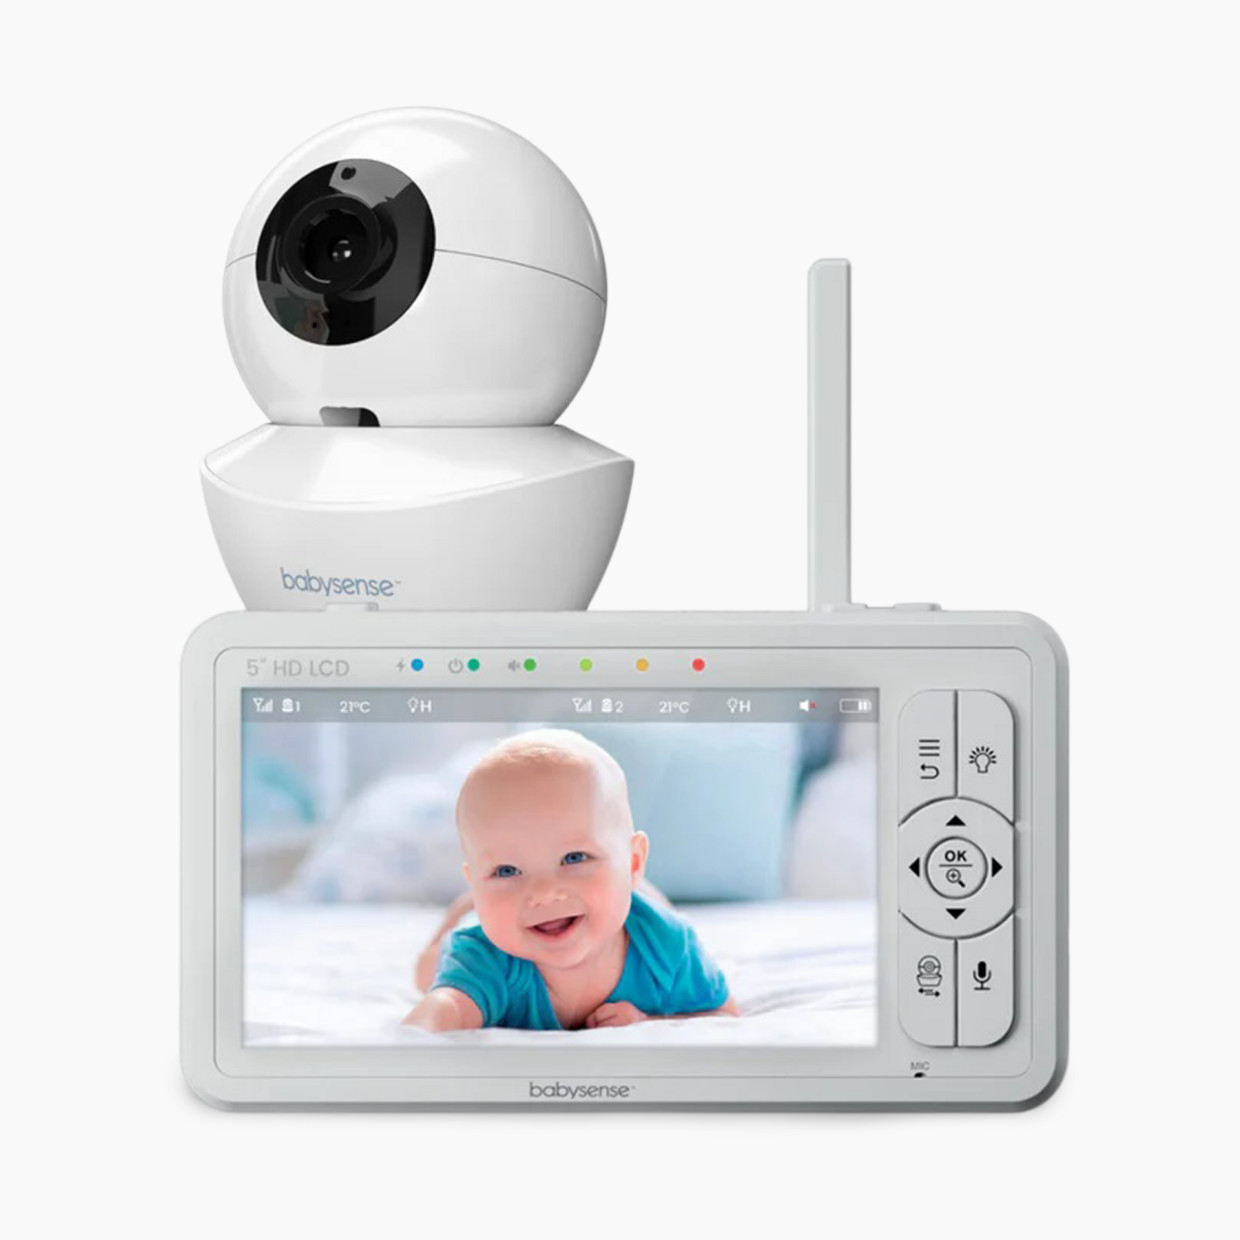 Babysense HD Split Screen Video Baby Monitor HD S2 - 1 Camera